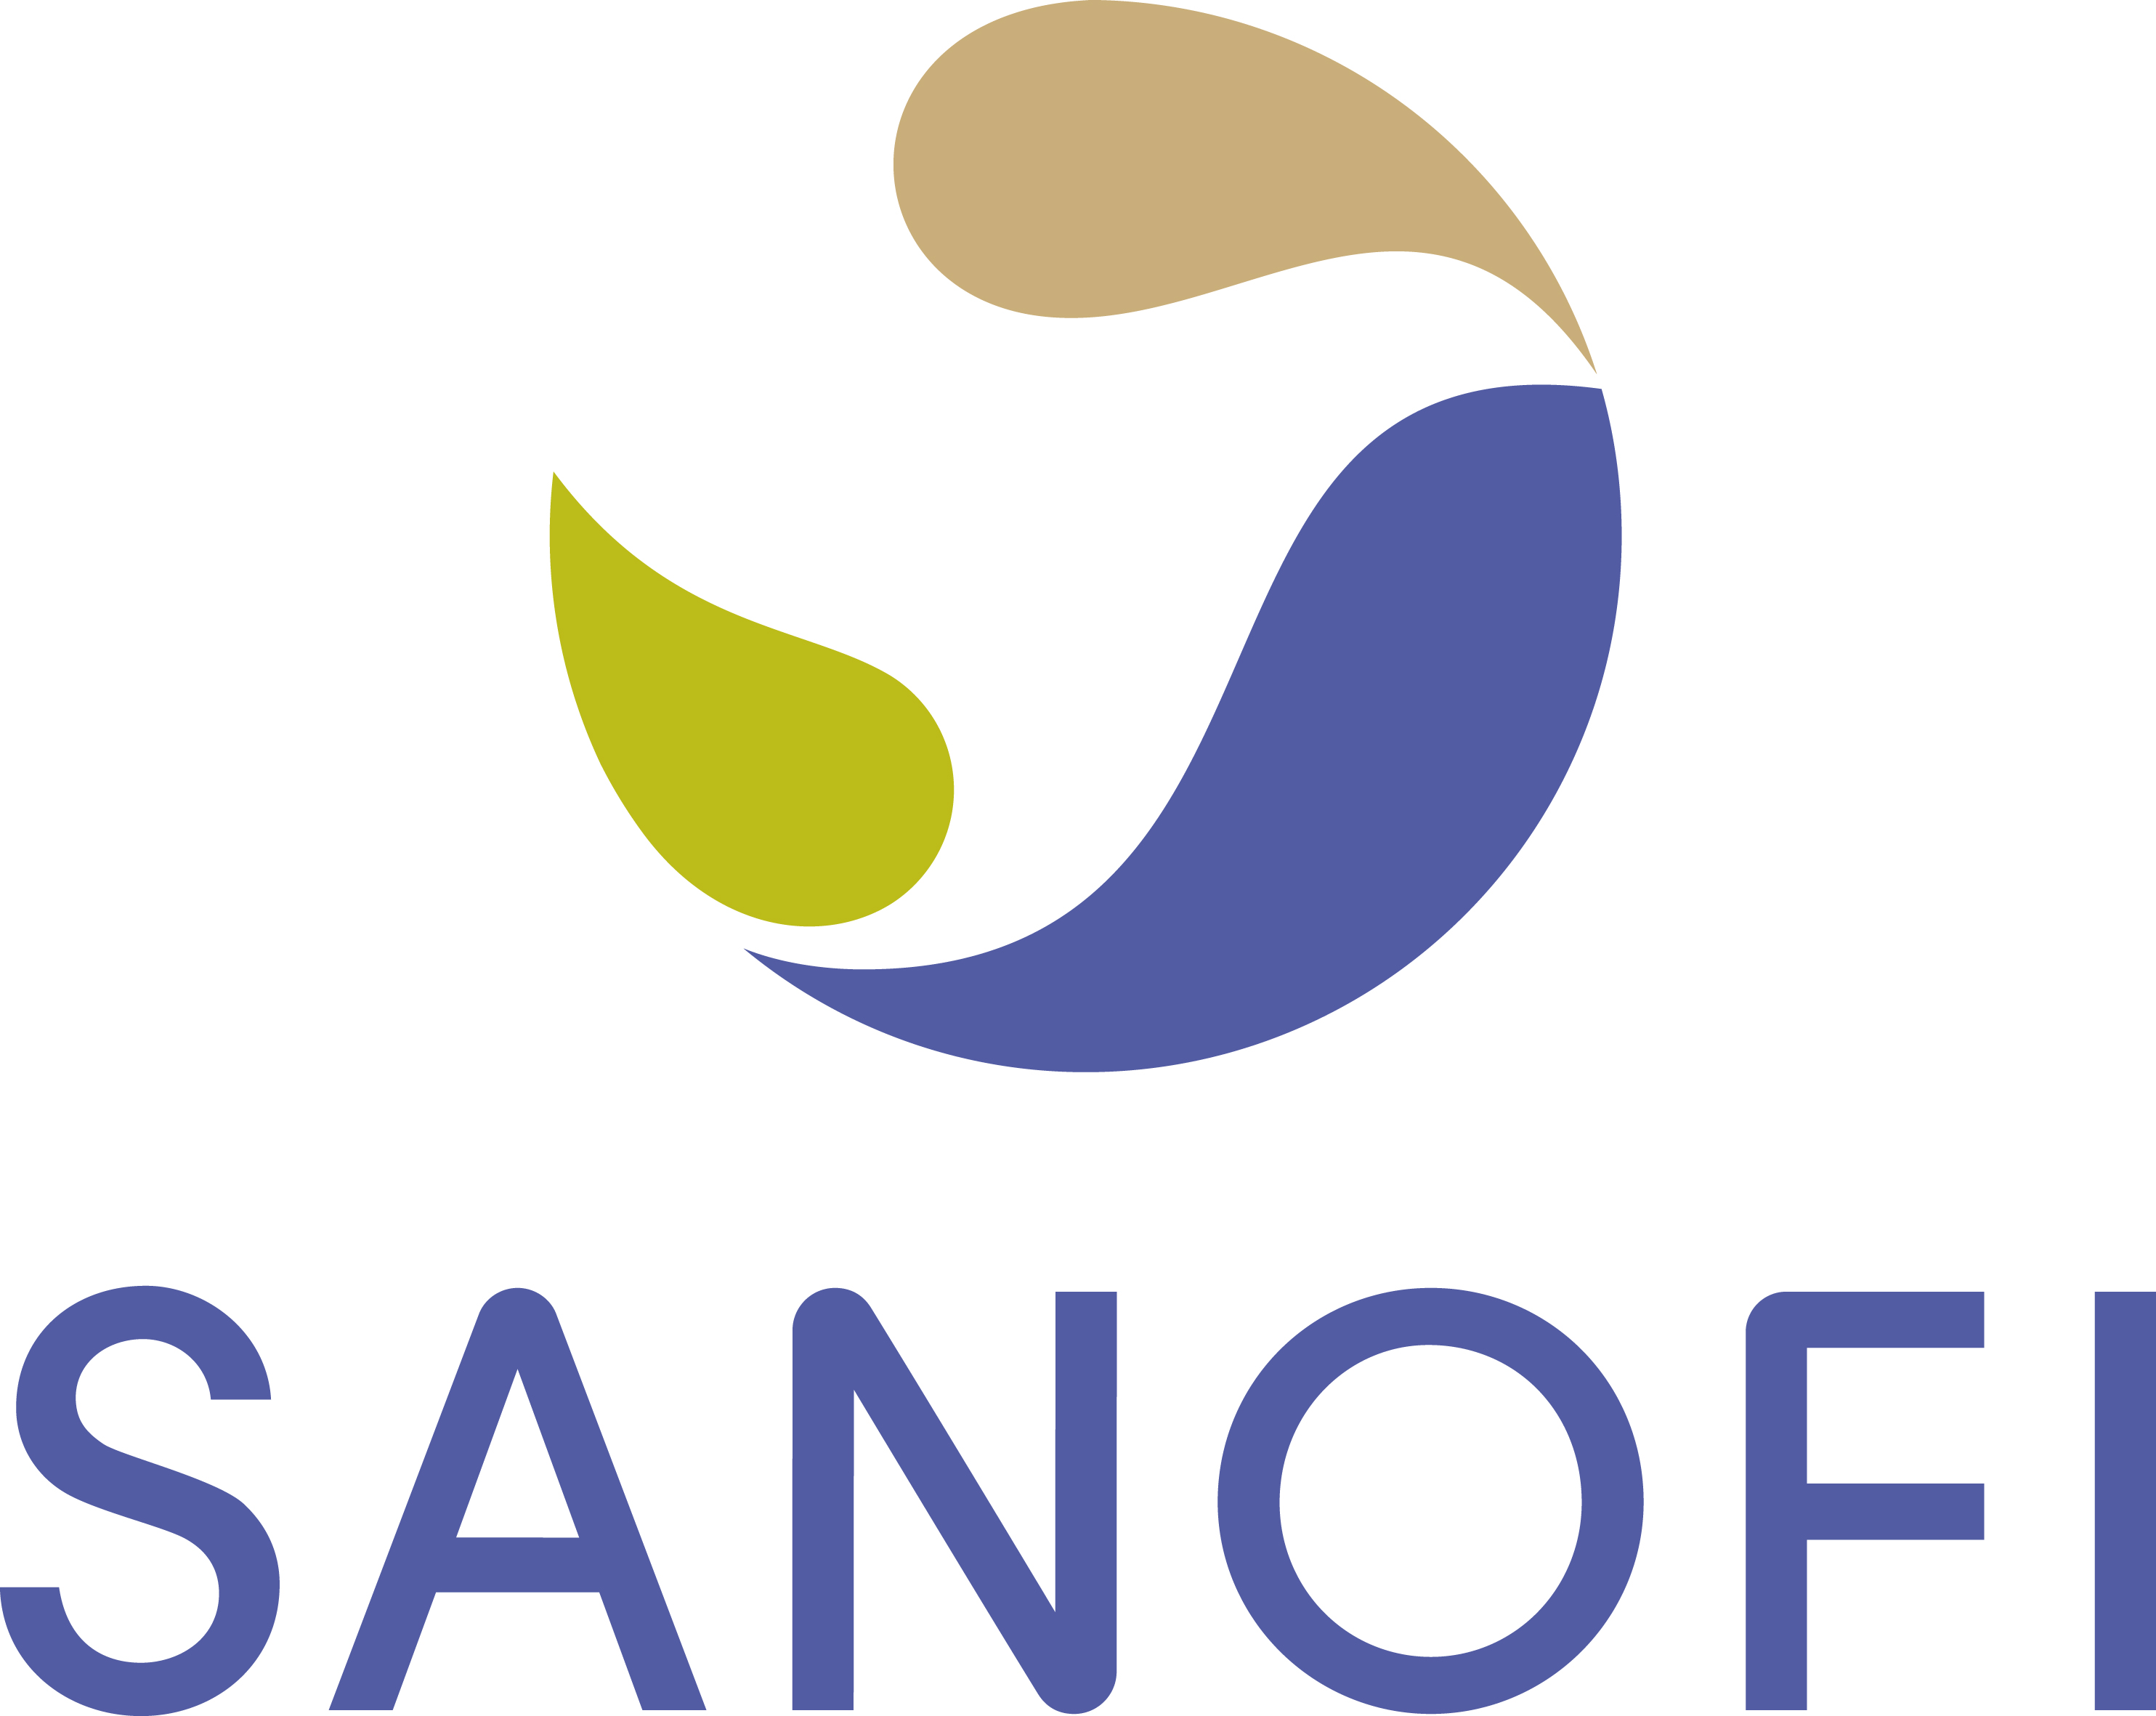 Corporate logo for OI Portal Link: "Sanofi" linkes to their open innovation portal